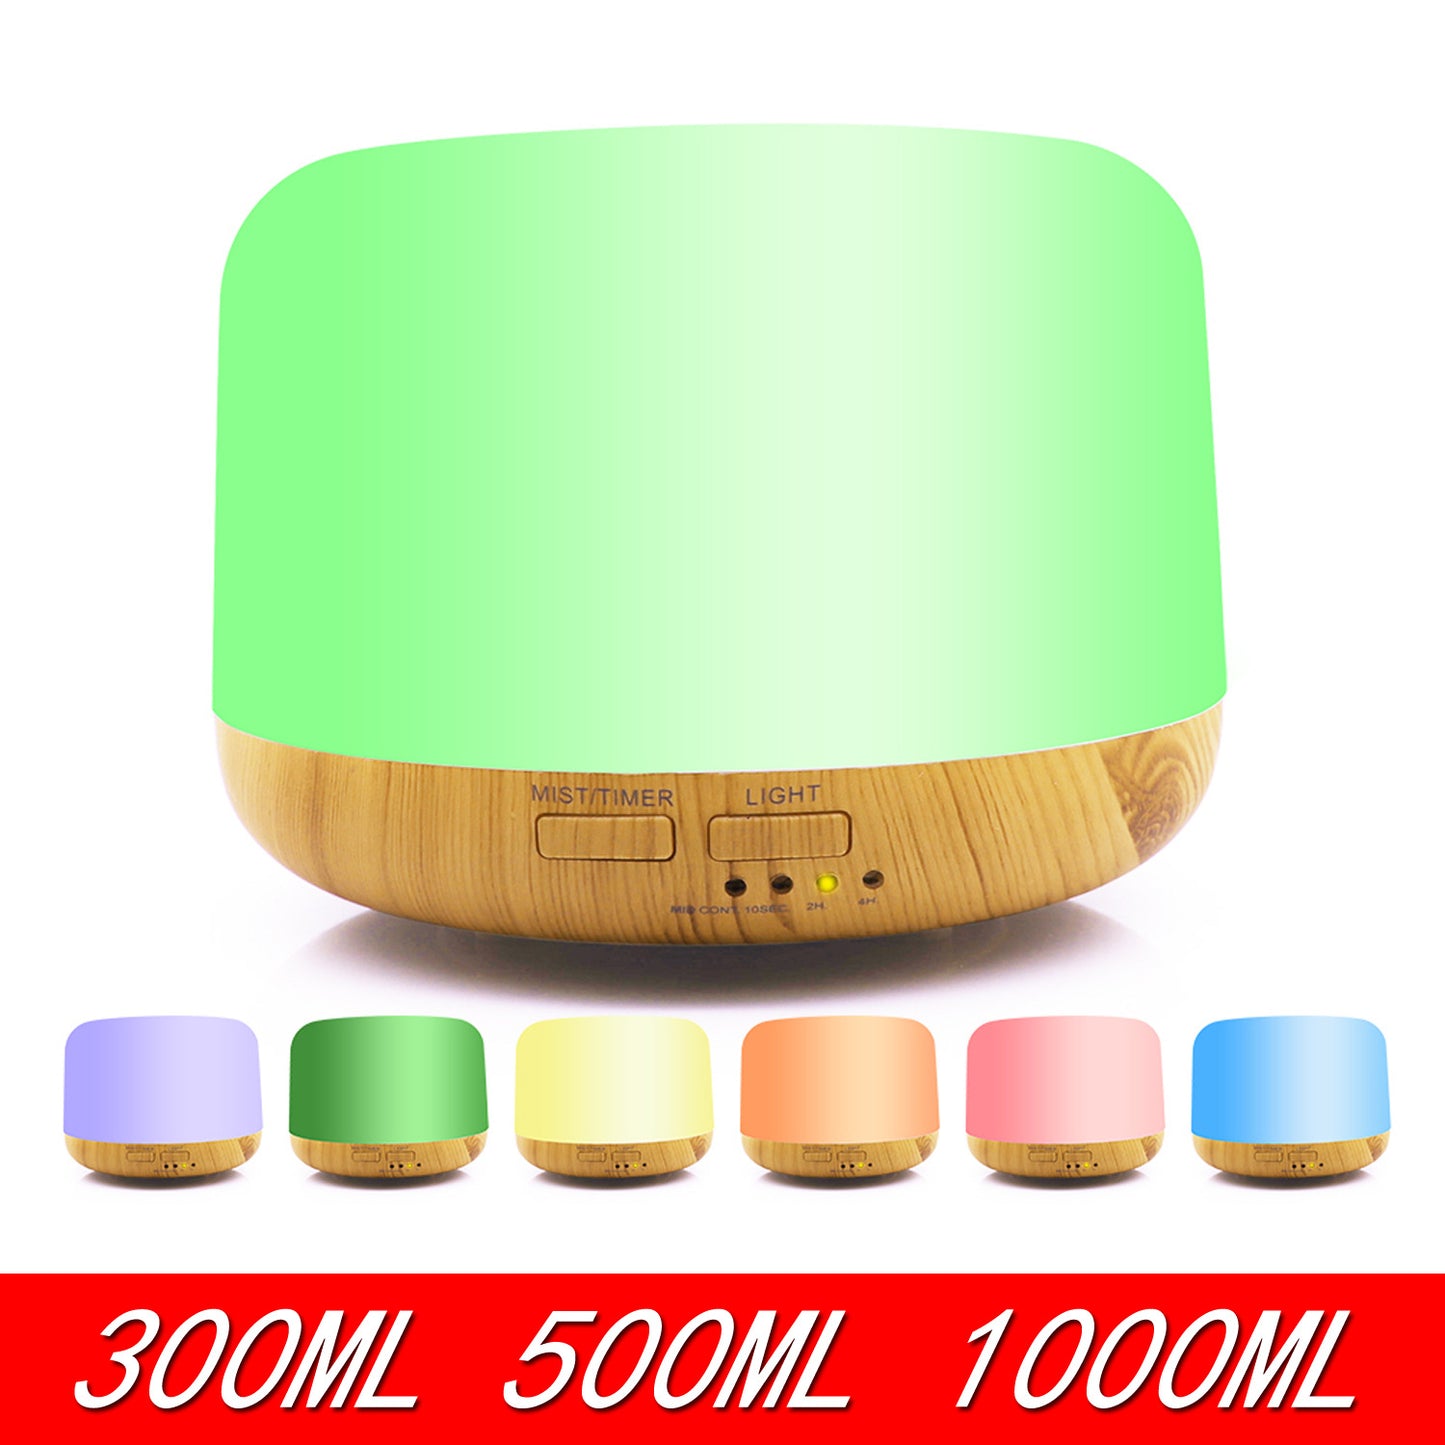 300ml Ultrasonic Colorful Aroma Diffuser 500ml Bread Humidifier Household wood grain